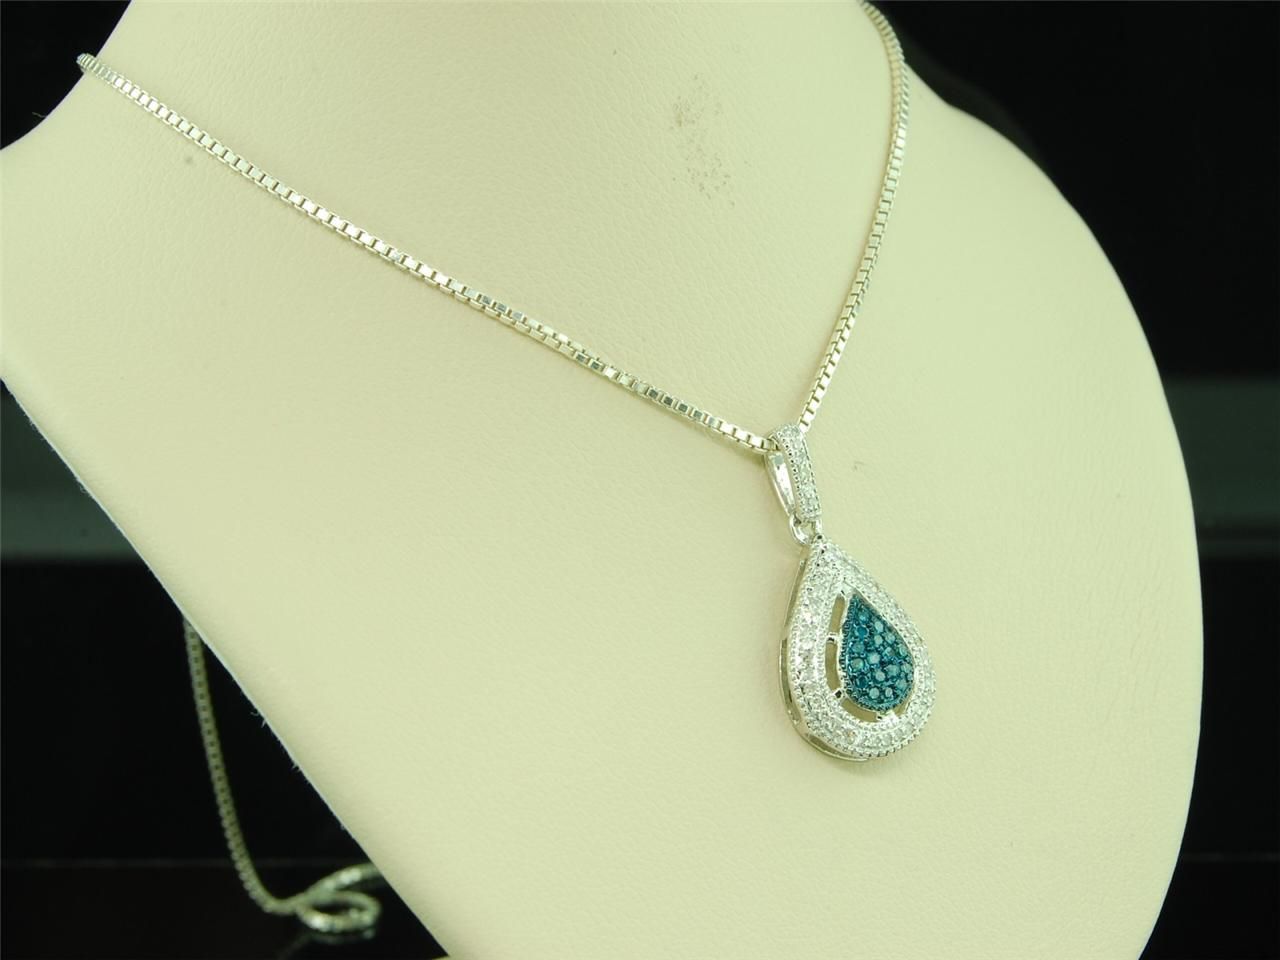  Gold Blue Diamond Teardrop Pendant Charm for Necklace 0 21 Ct